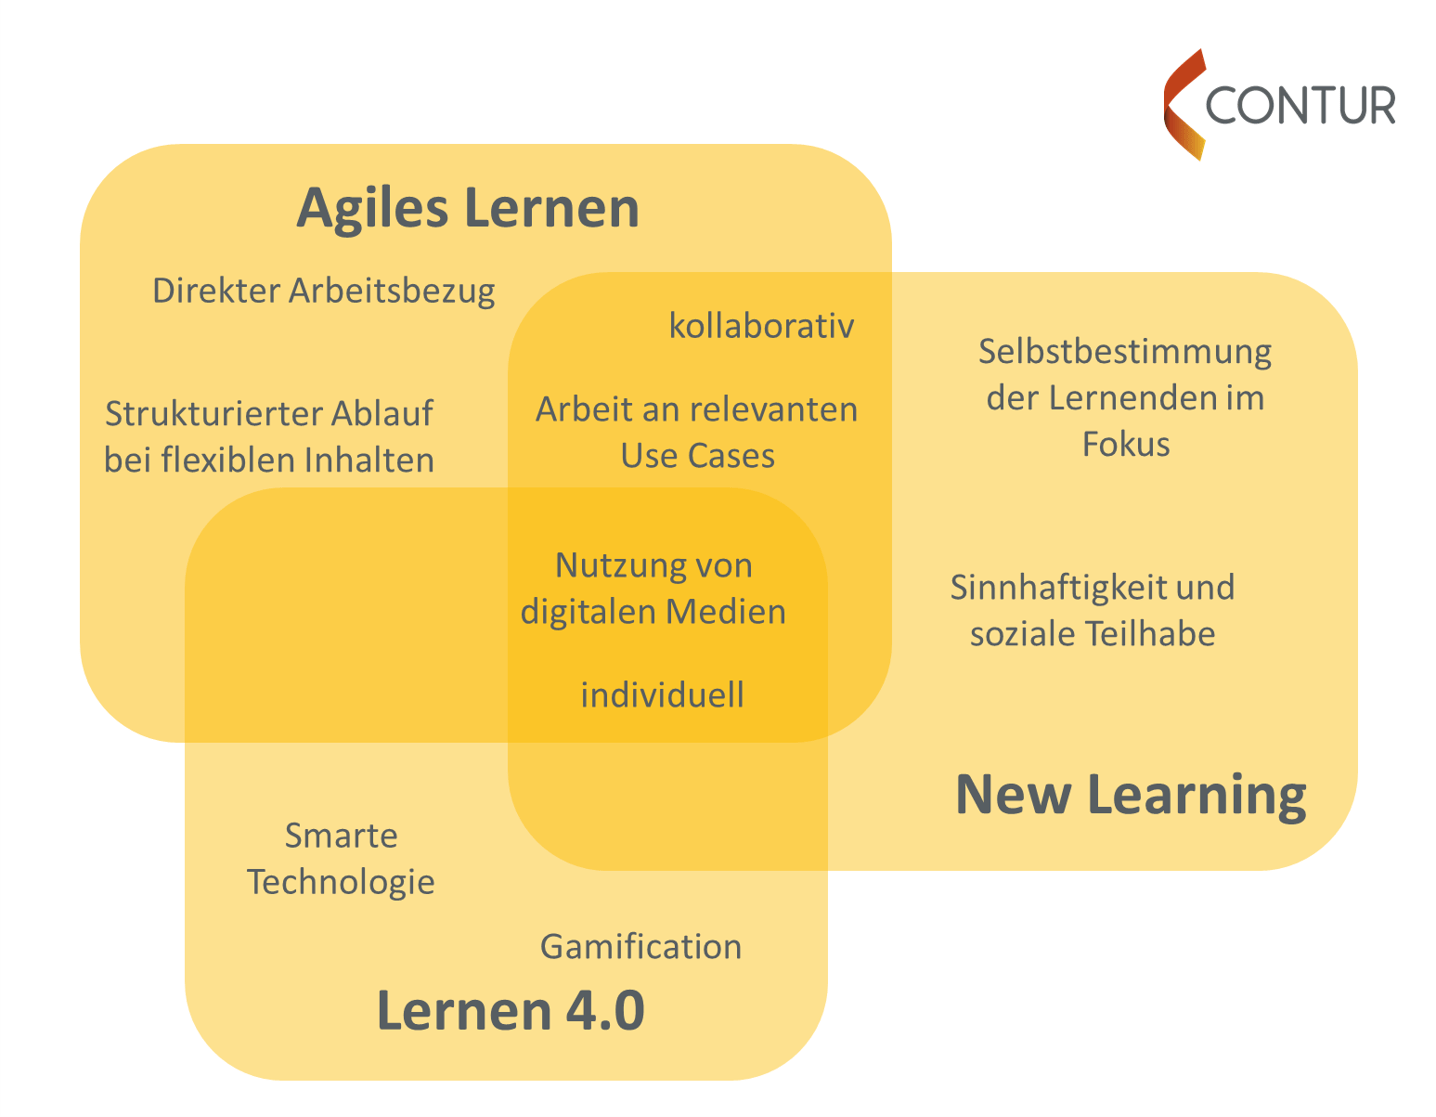 abgrenzung agiles lernen new learning lernen 4.0